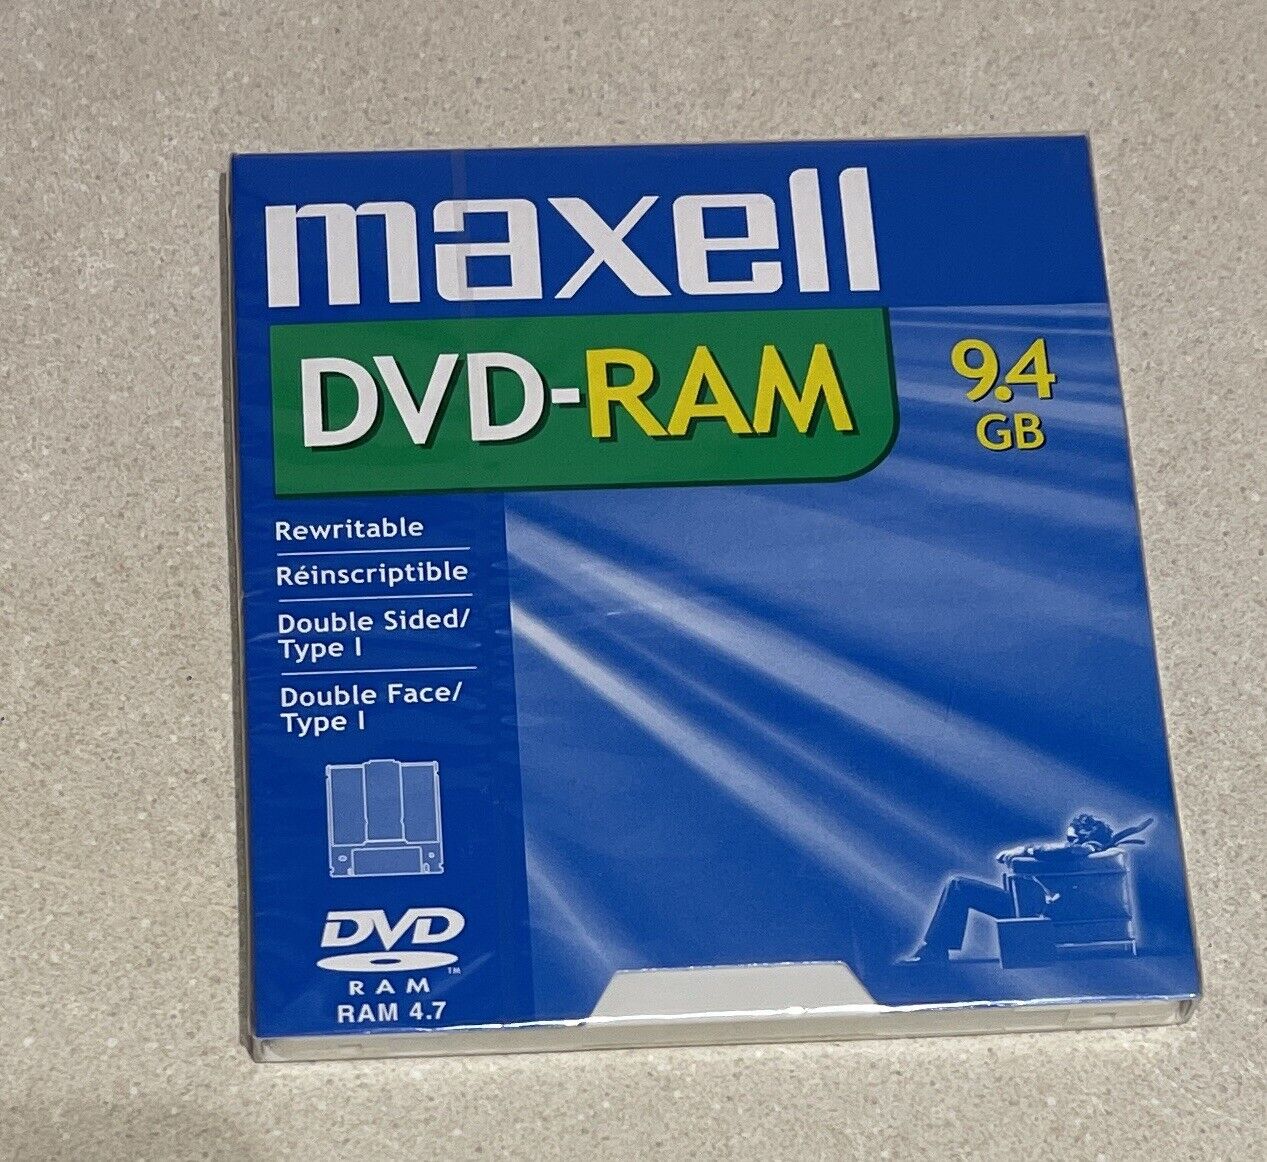 Maxell, DVD-Ram 9.4GB Rewritable Disk, 636045